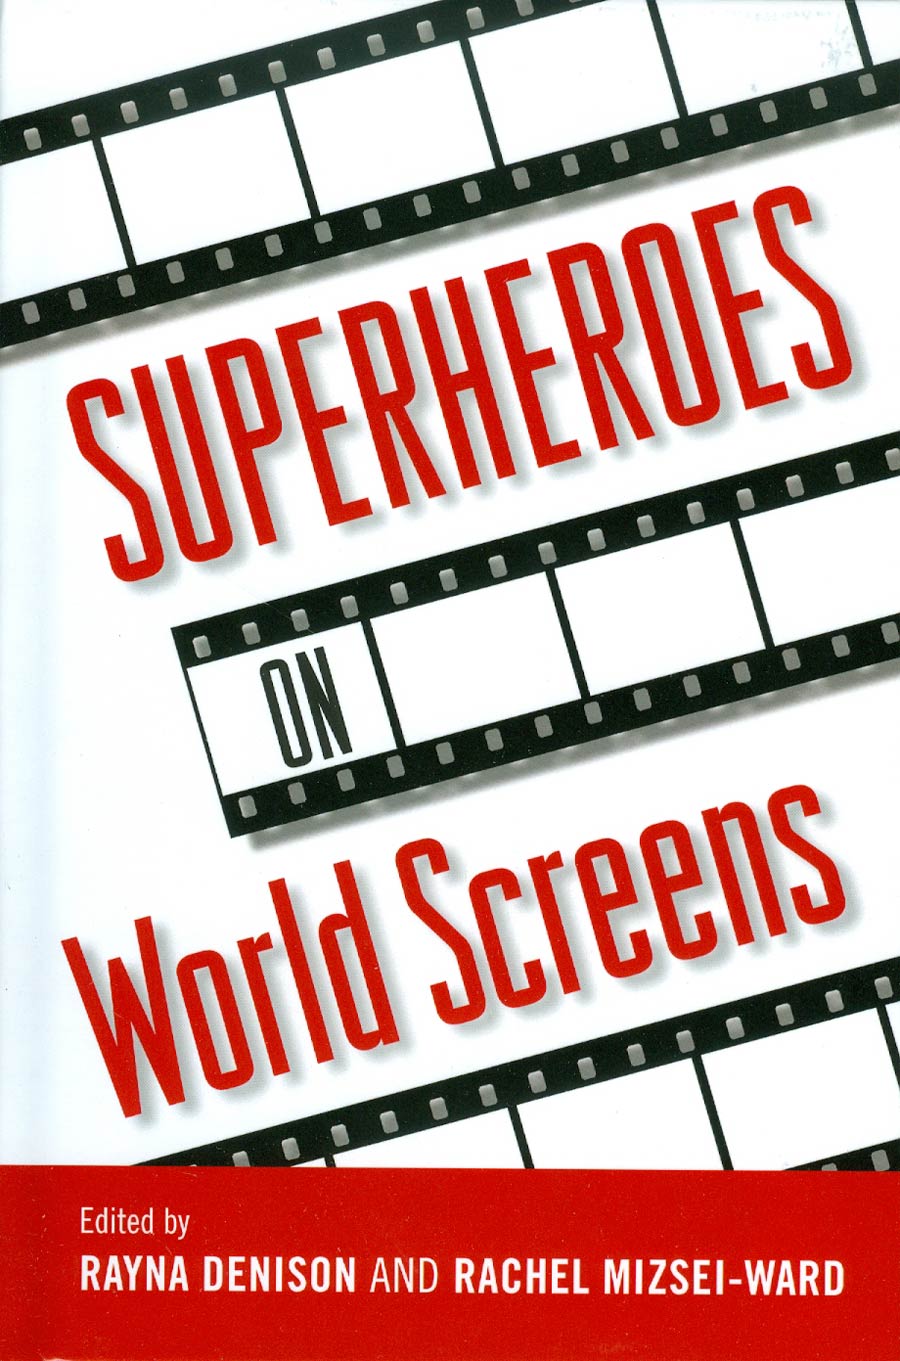 Superheroes On World Screens HC